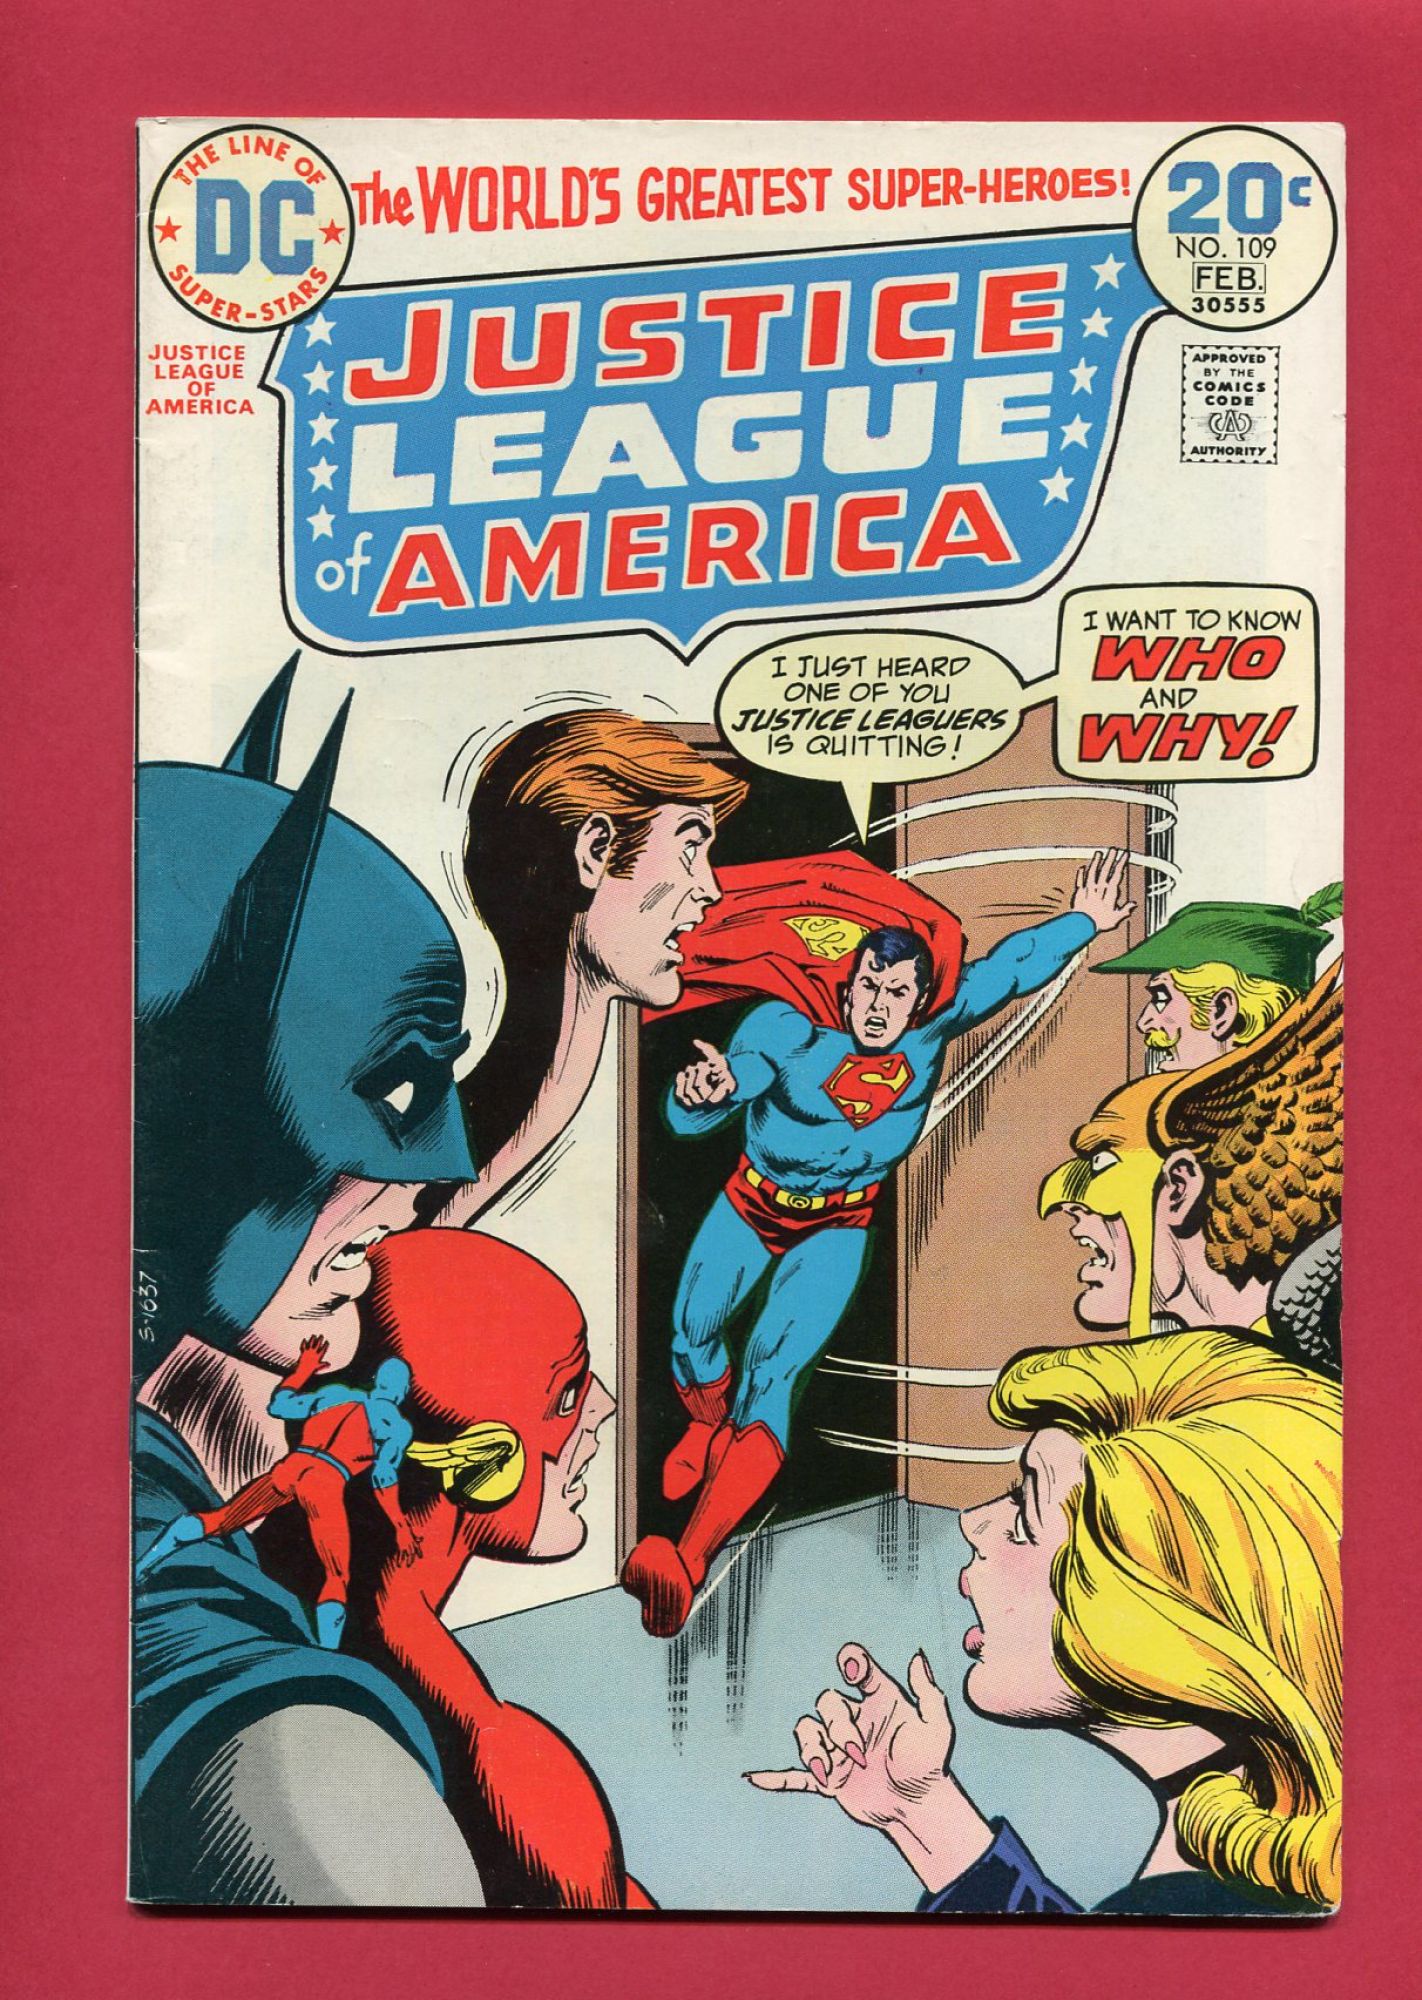 Justice League of America #109, Feb 1974, 6.5 FN+